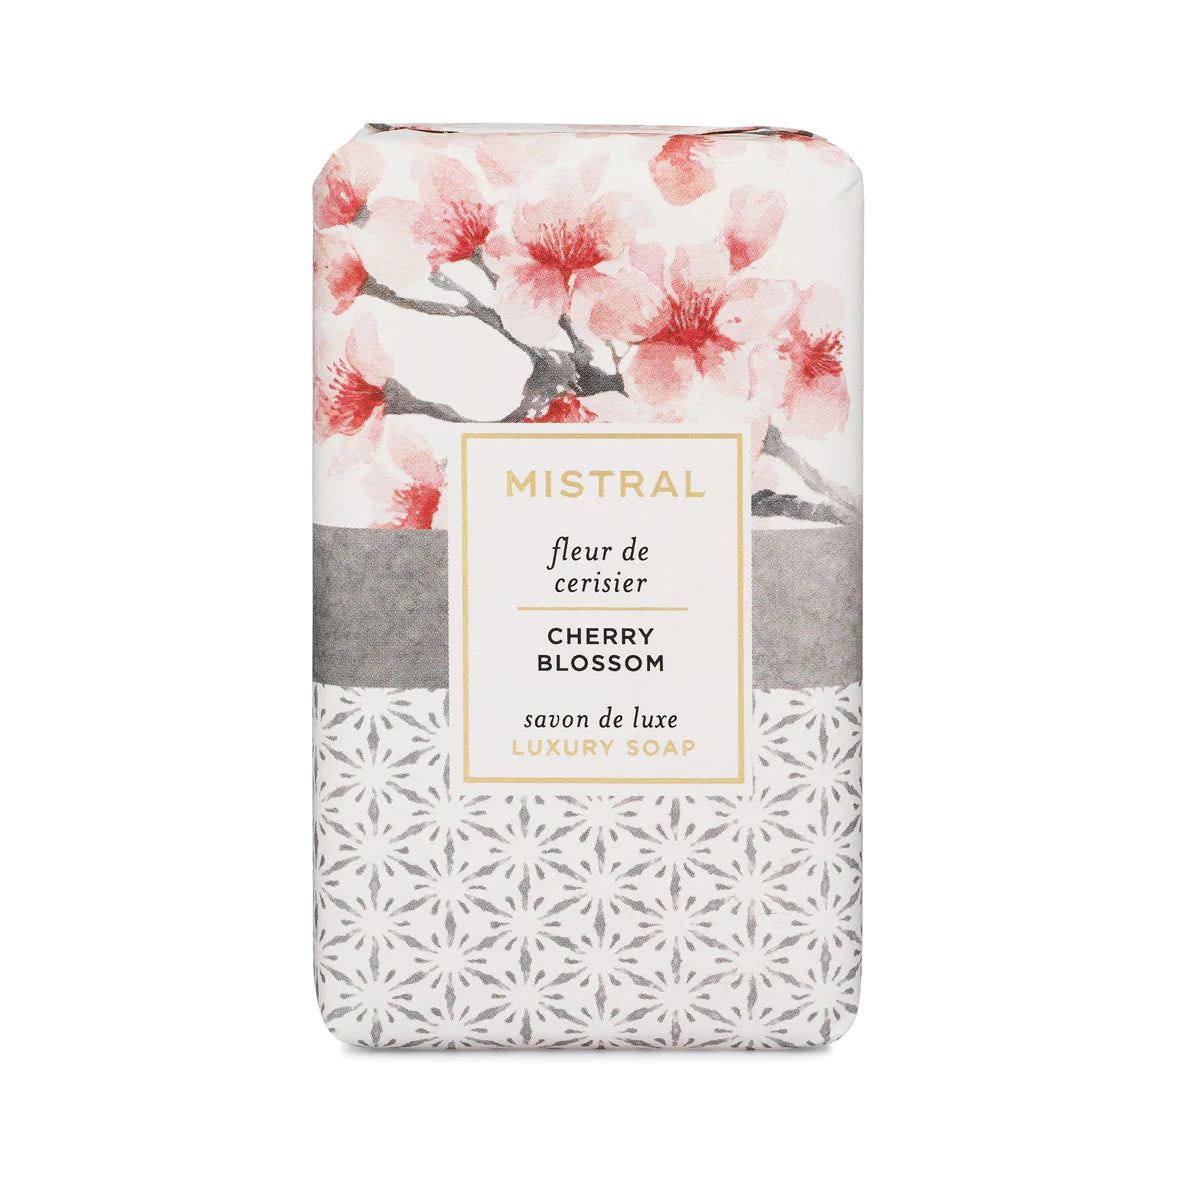 Mistral Cherry Blossom Soap